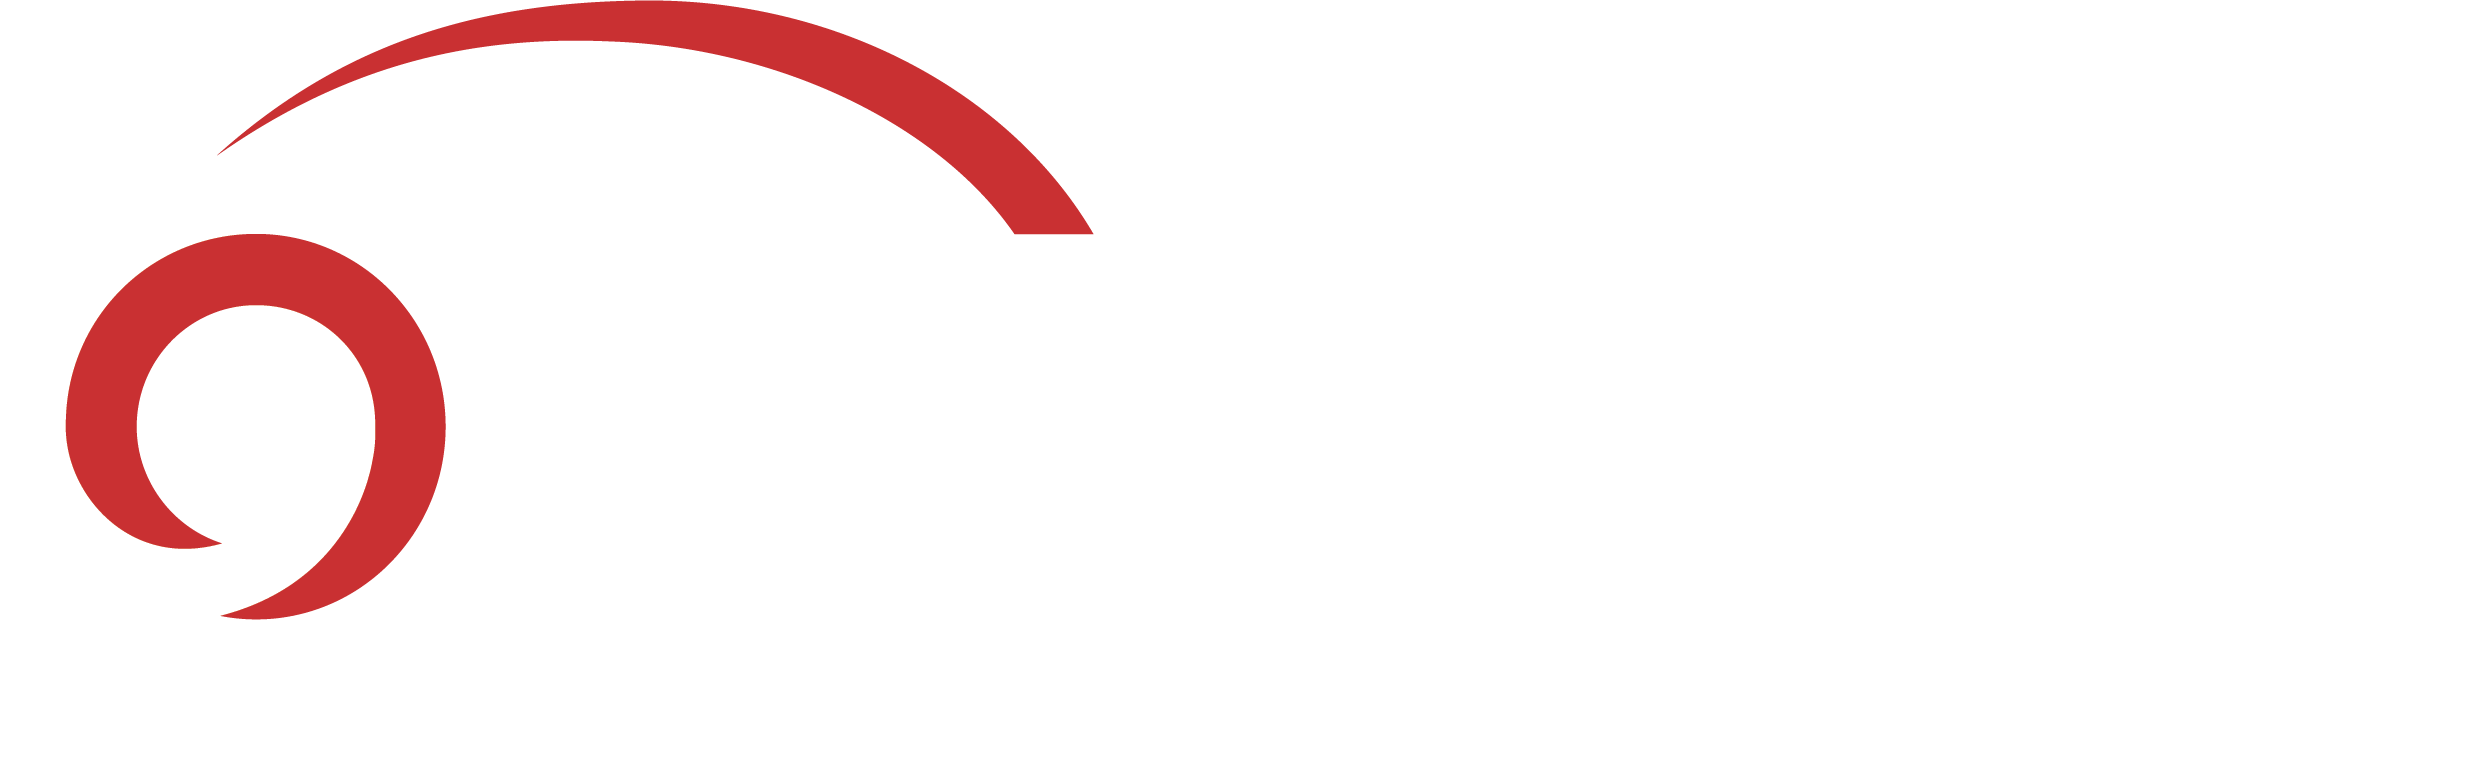 Login - Orbit World Travel